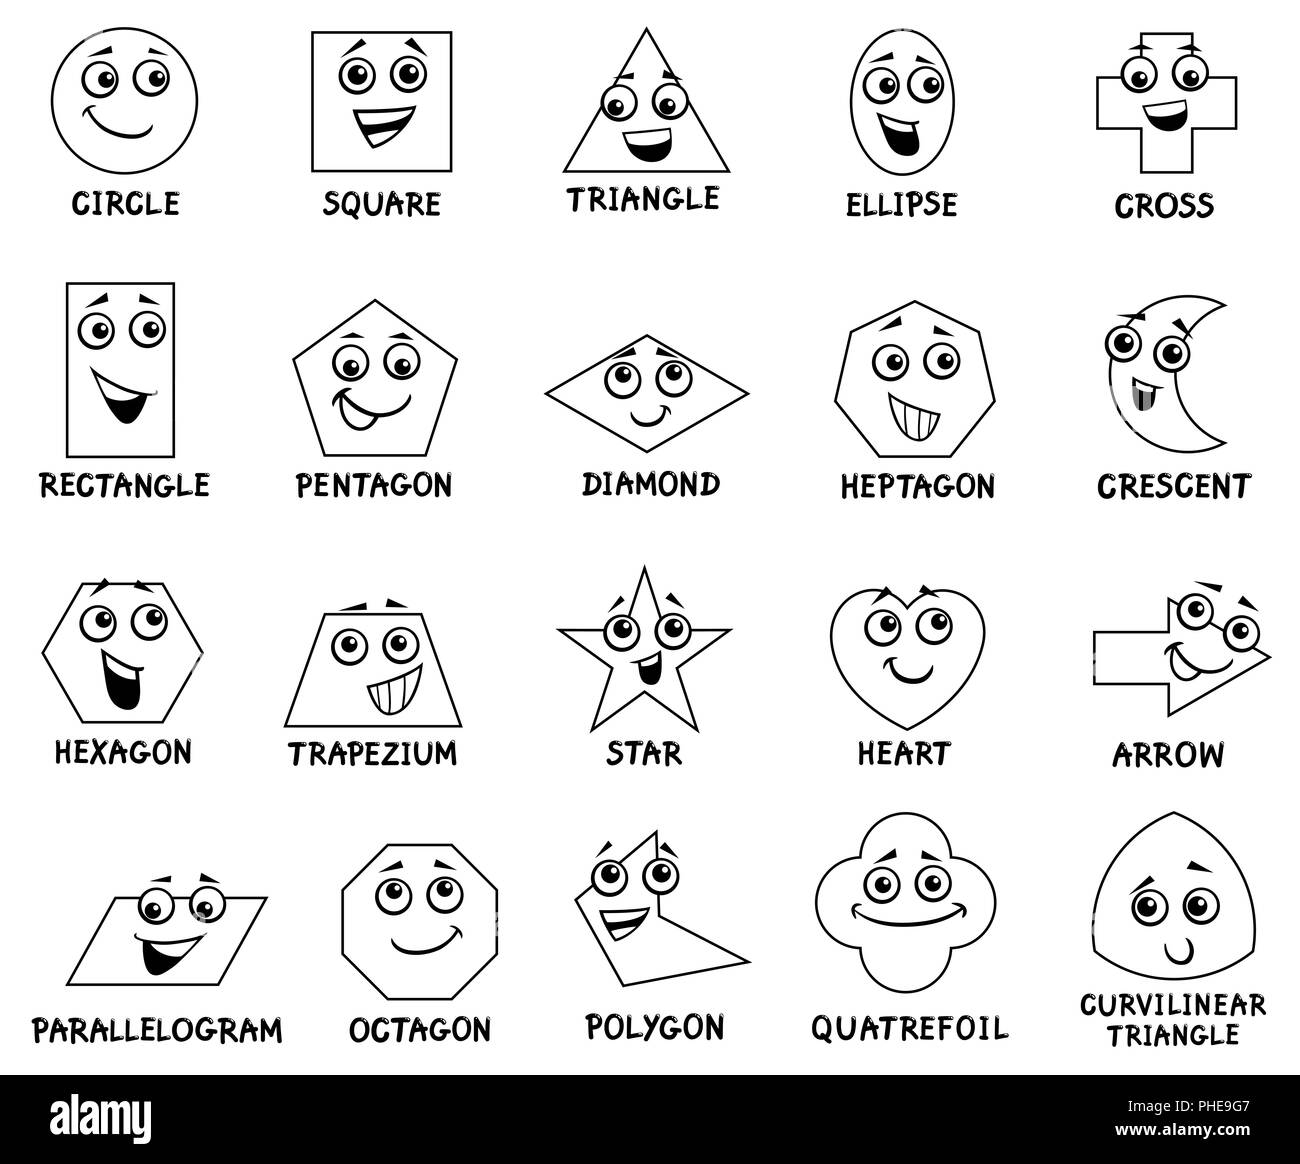 cartoon basic geometric shapes characters Stock Photo